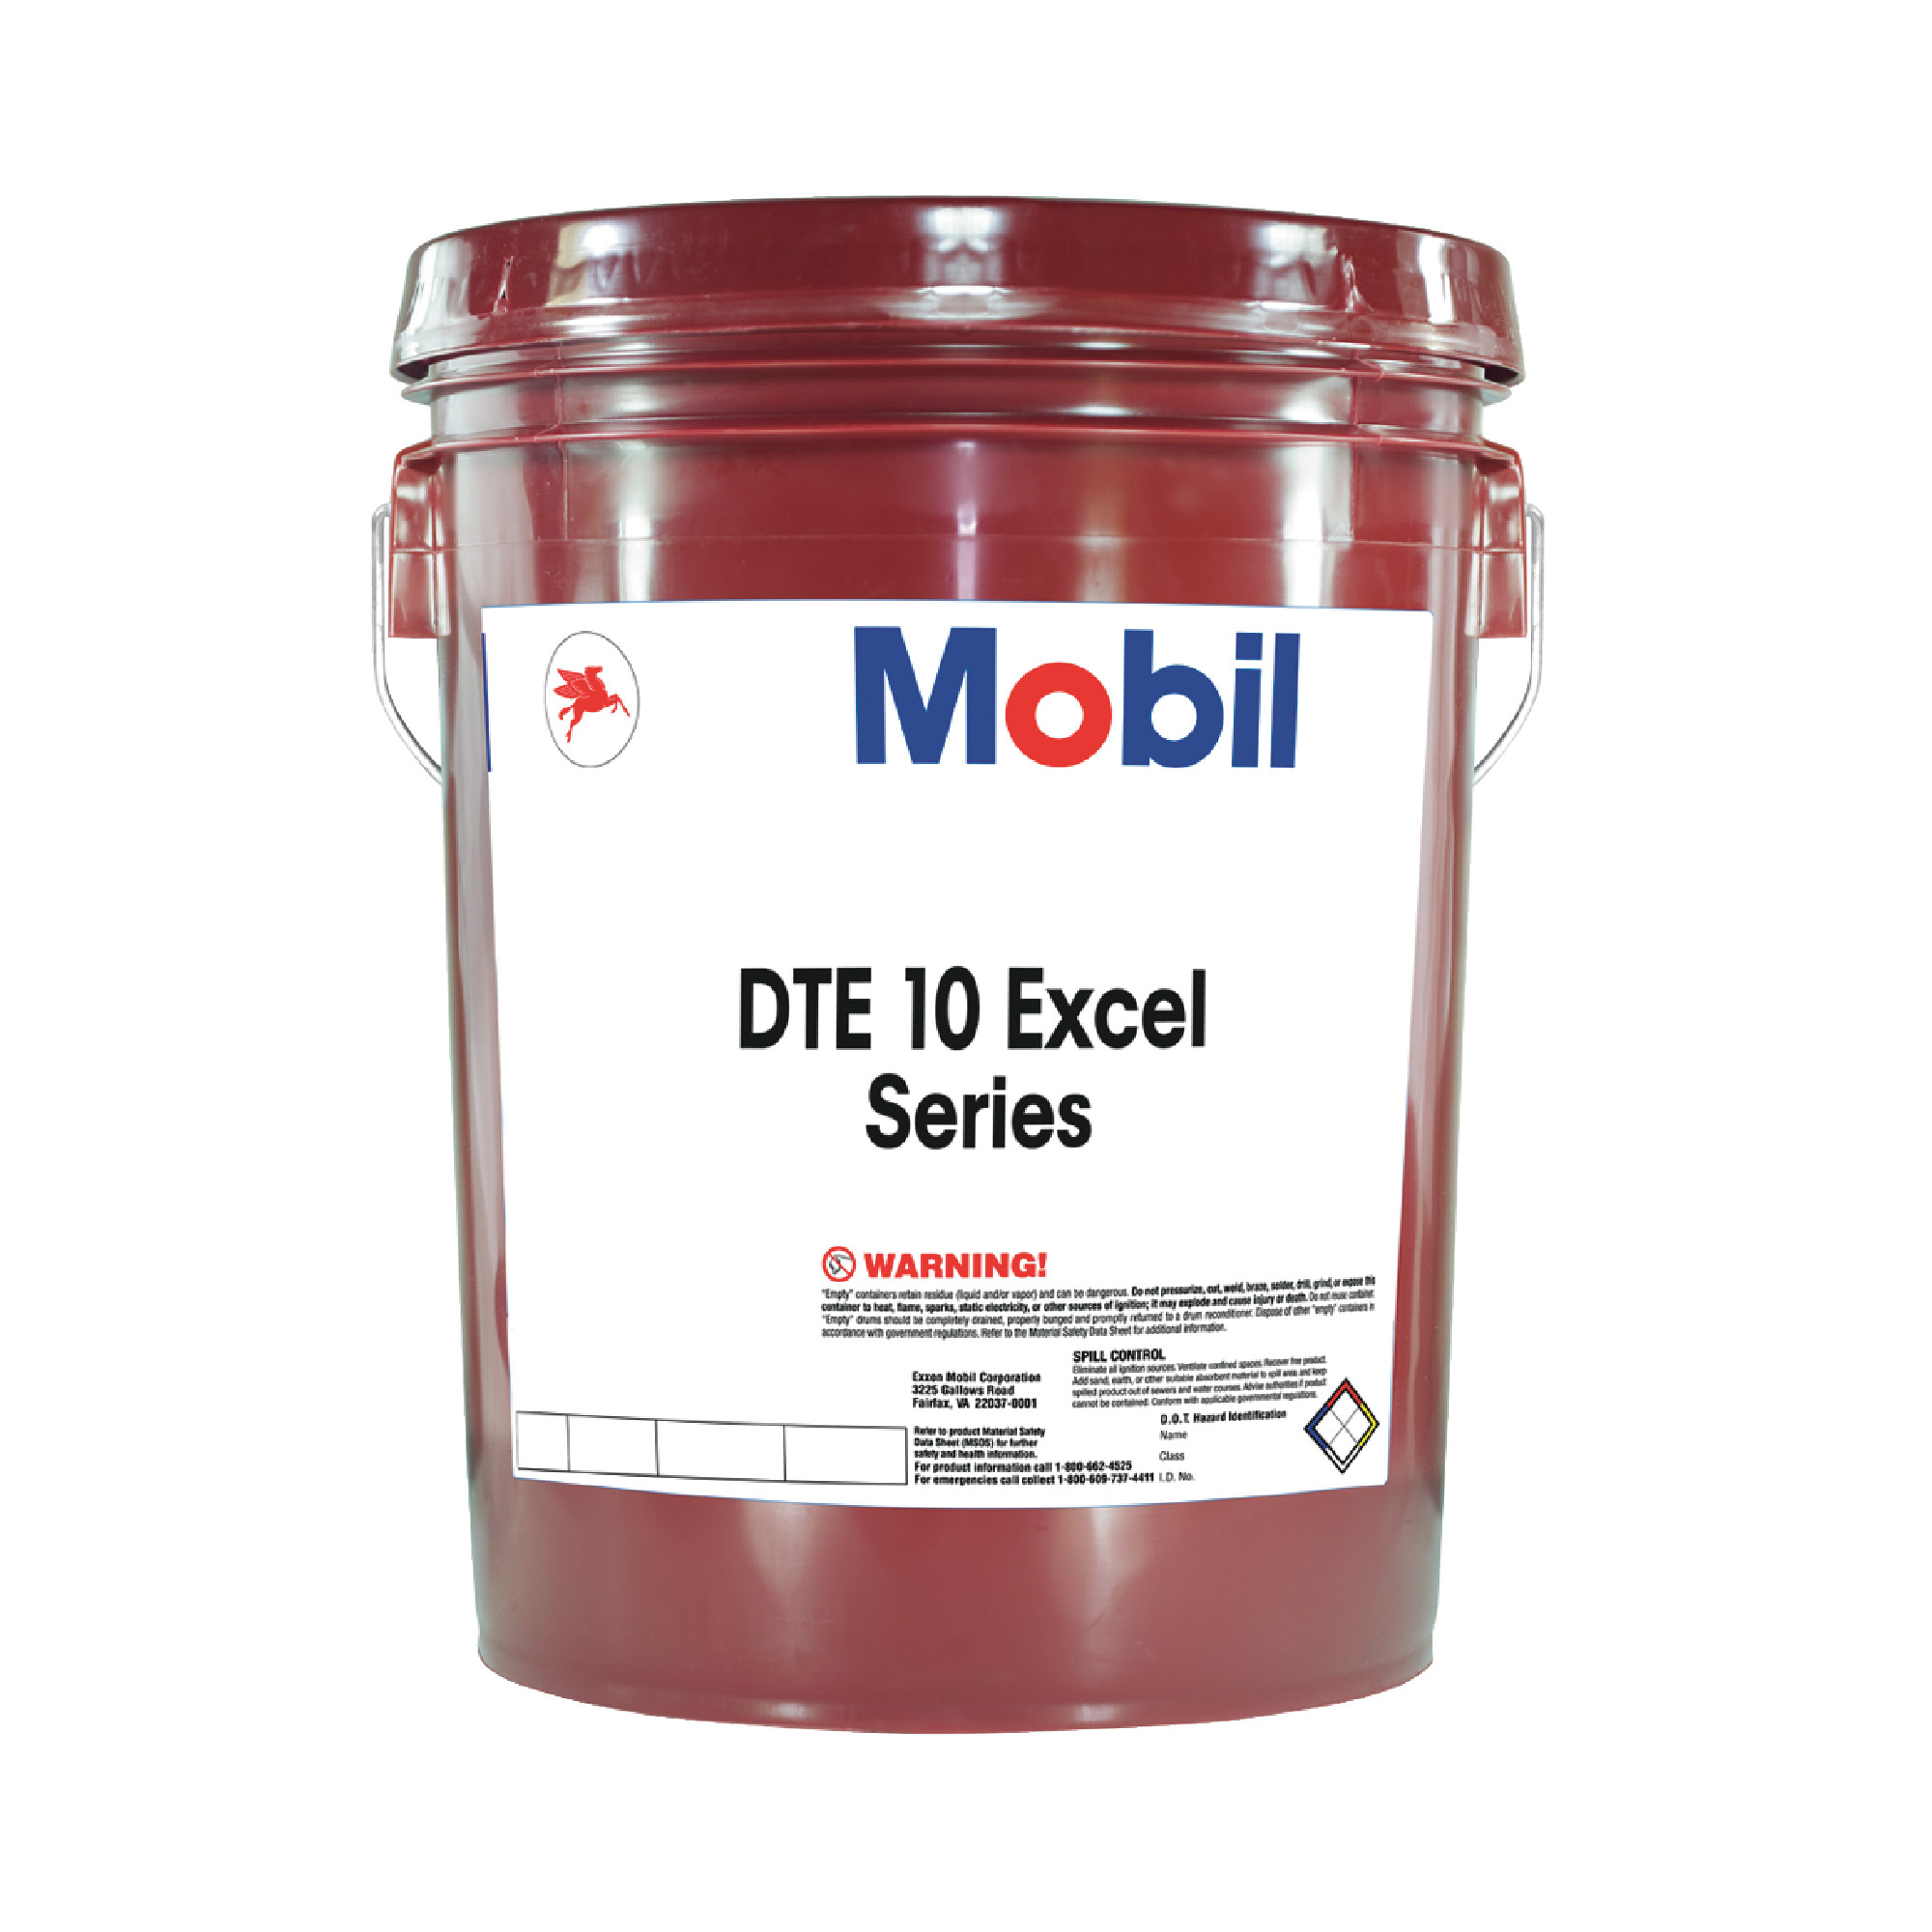 MOBIL DTE 10 EXCEL 32 5 Gallon Pail Hydraulic Fluid